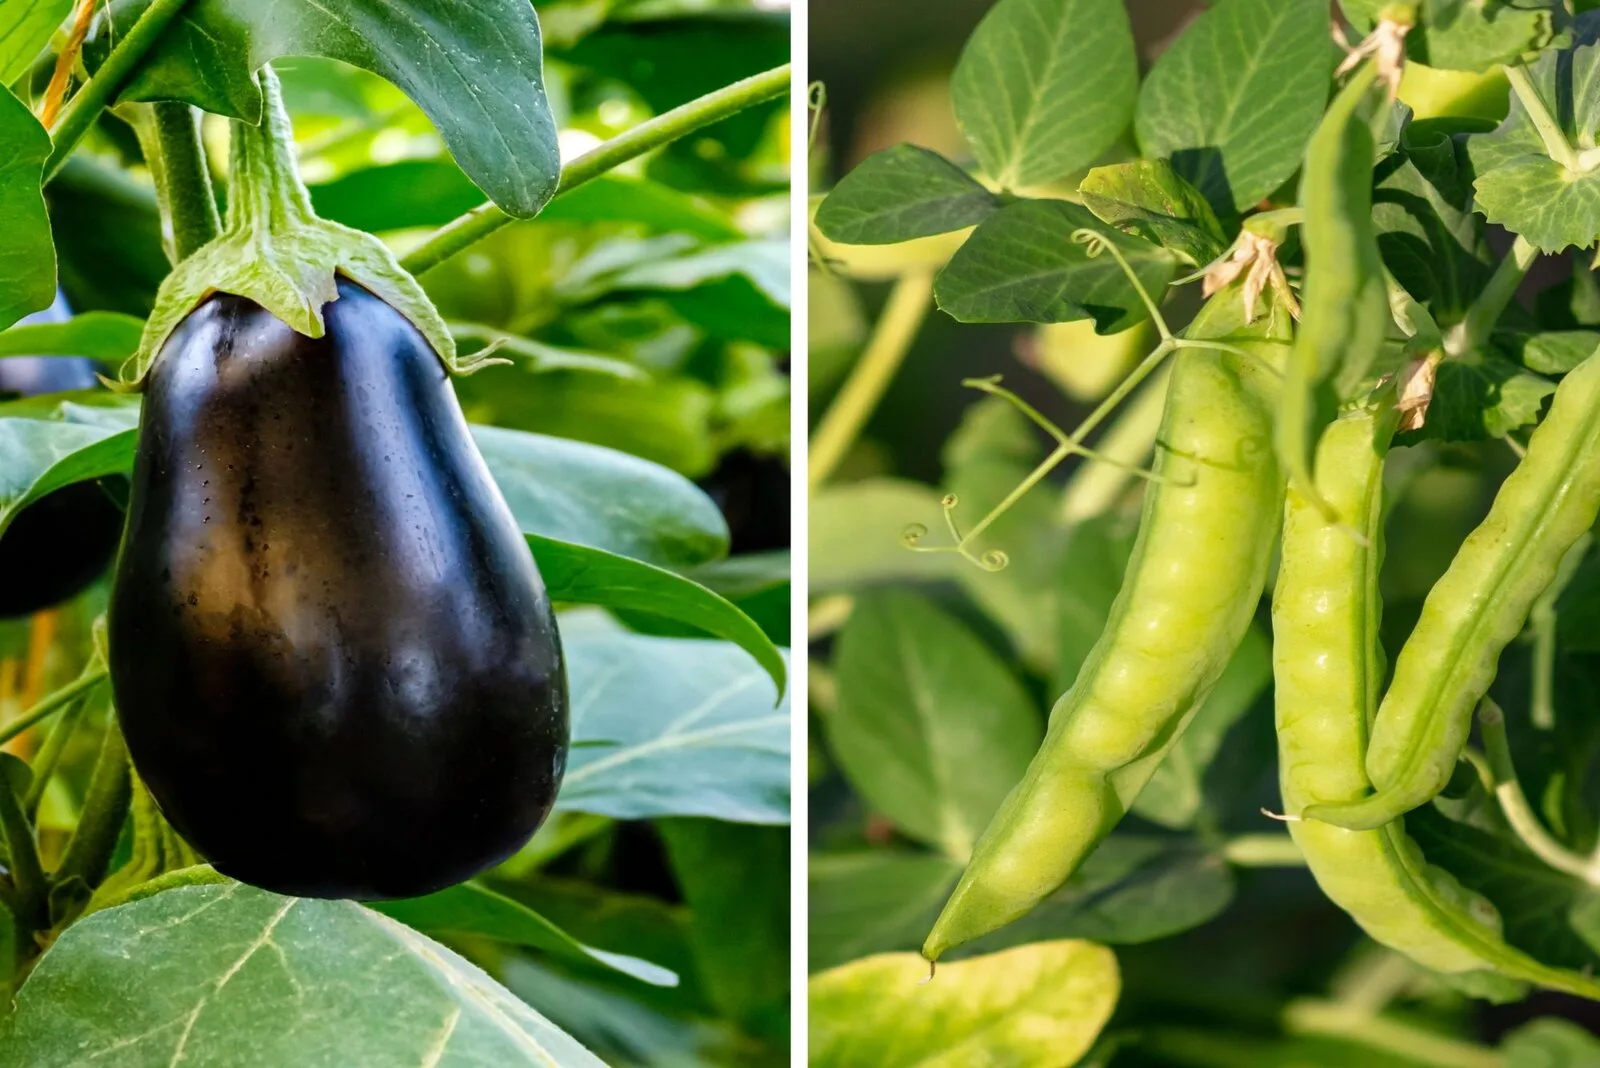 Bush Beans And Eggplants